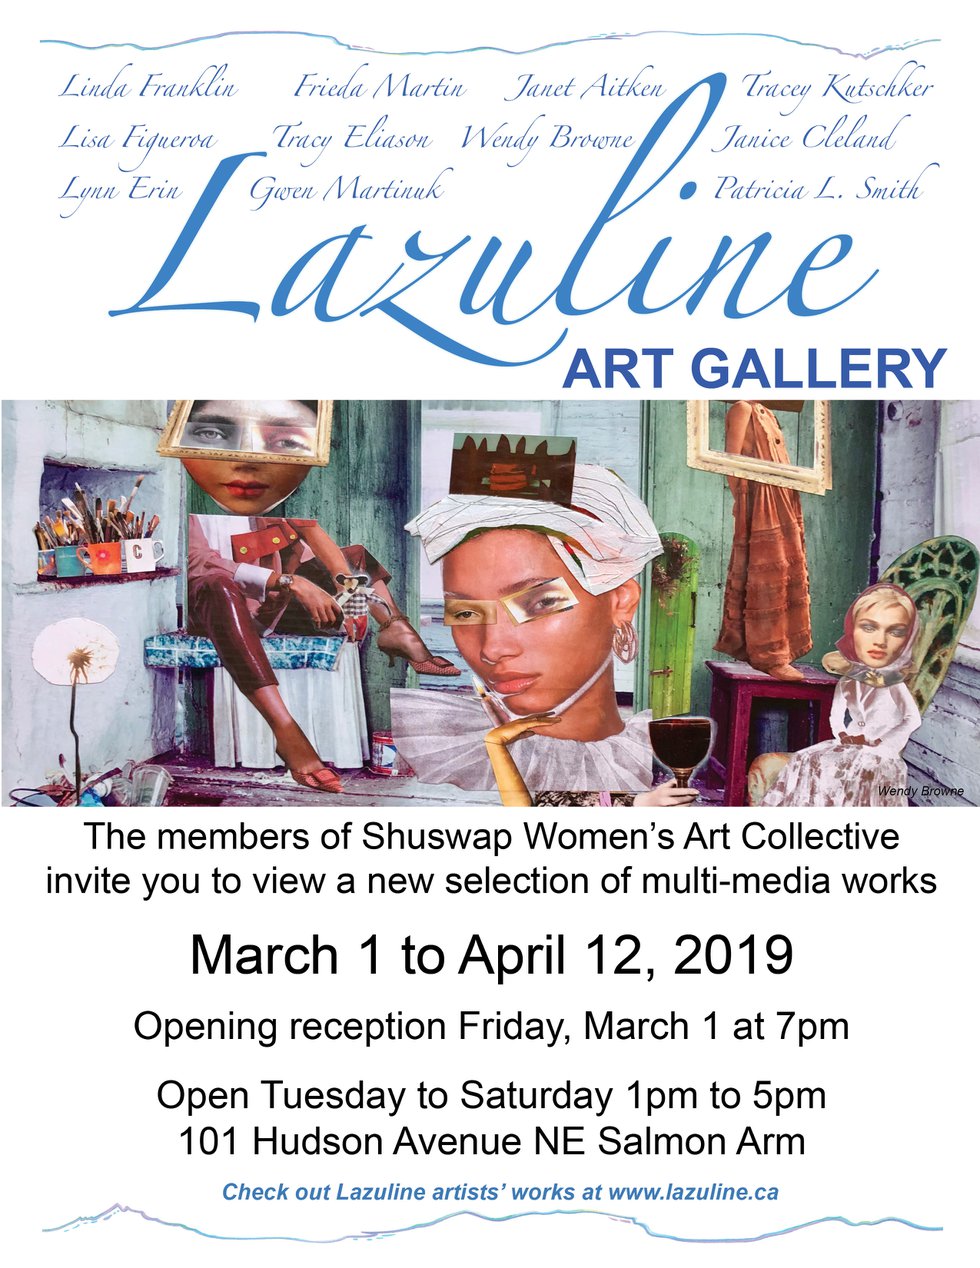 Lazuline Art Gallery, "Multi-Media Works," 2019